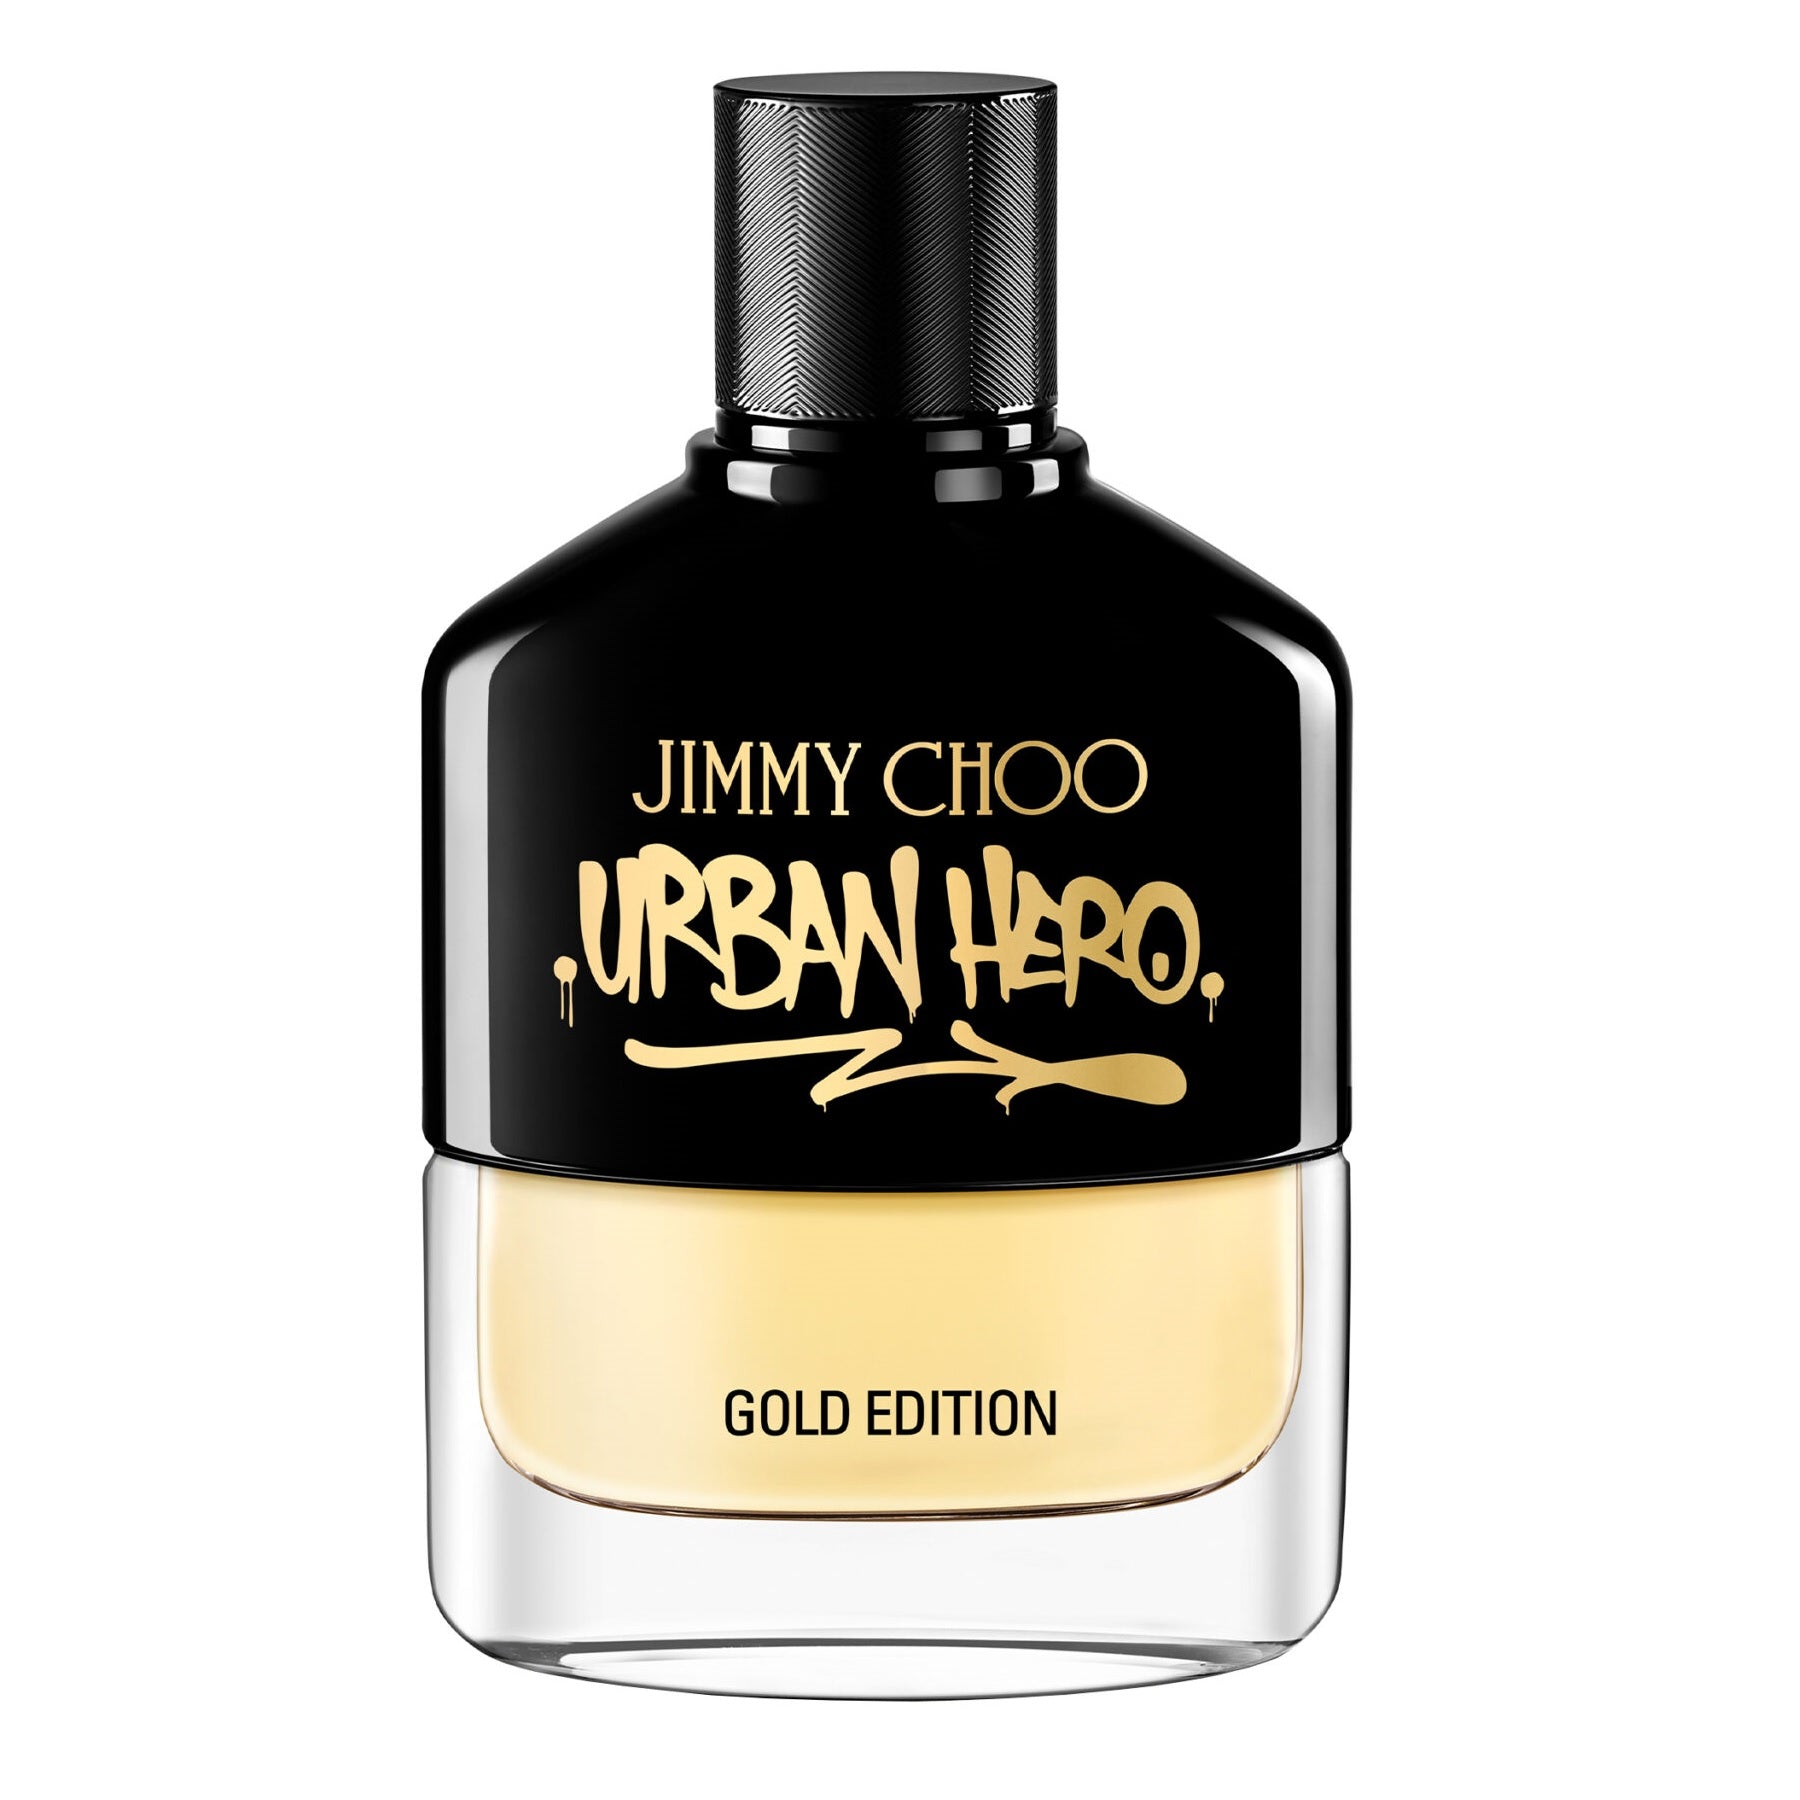 Jimmy Choo Urban Hero Gold Edition Eau De Parfum Spray 100ml - Feel Gorgeous